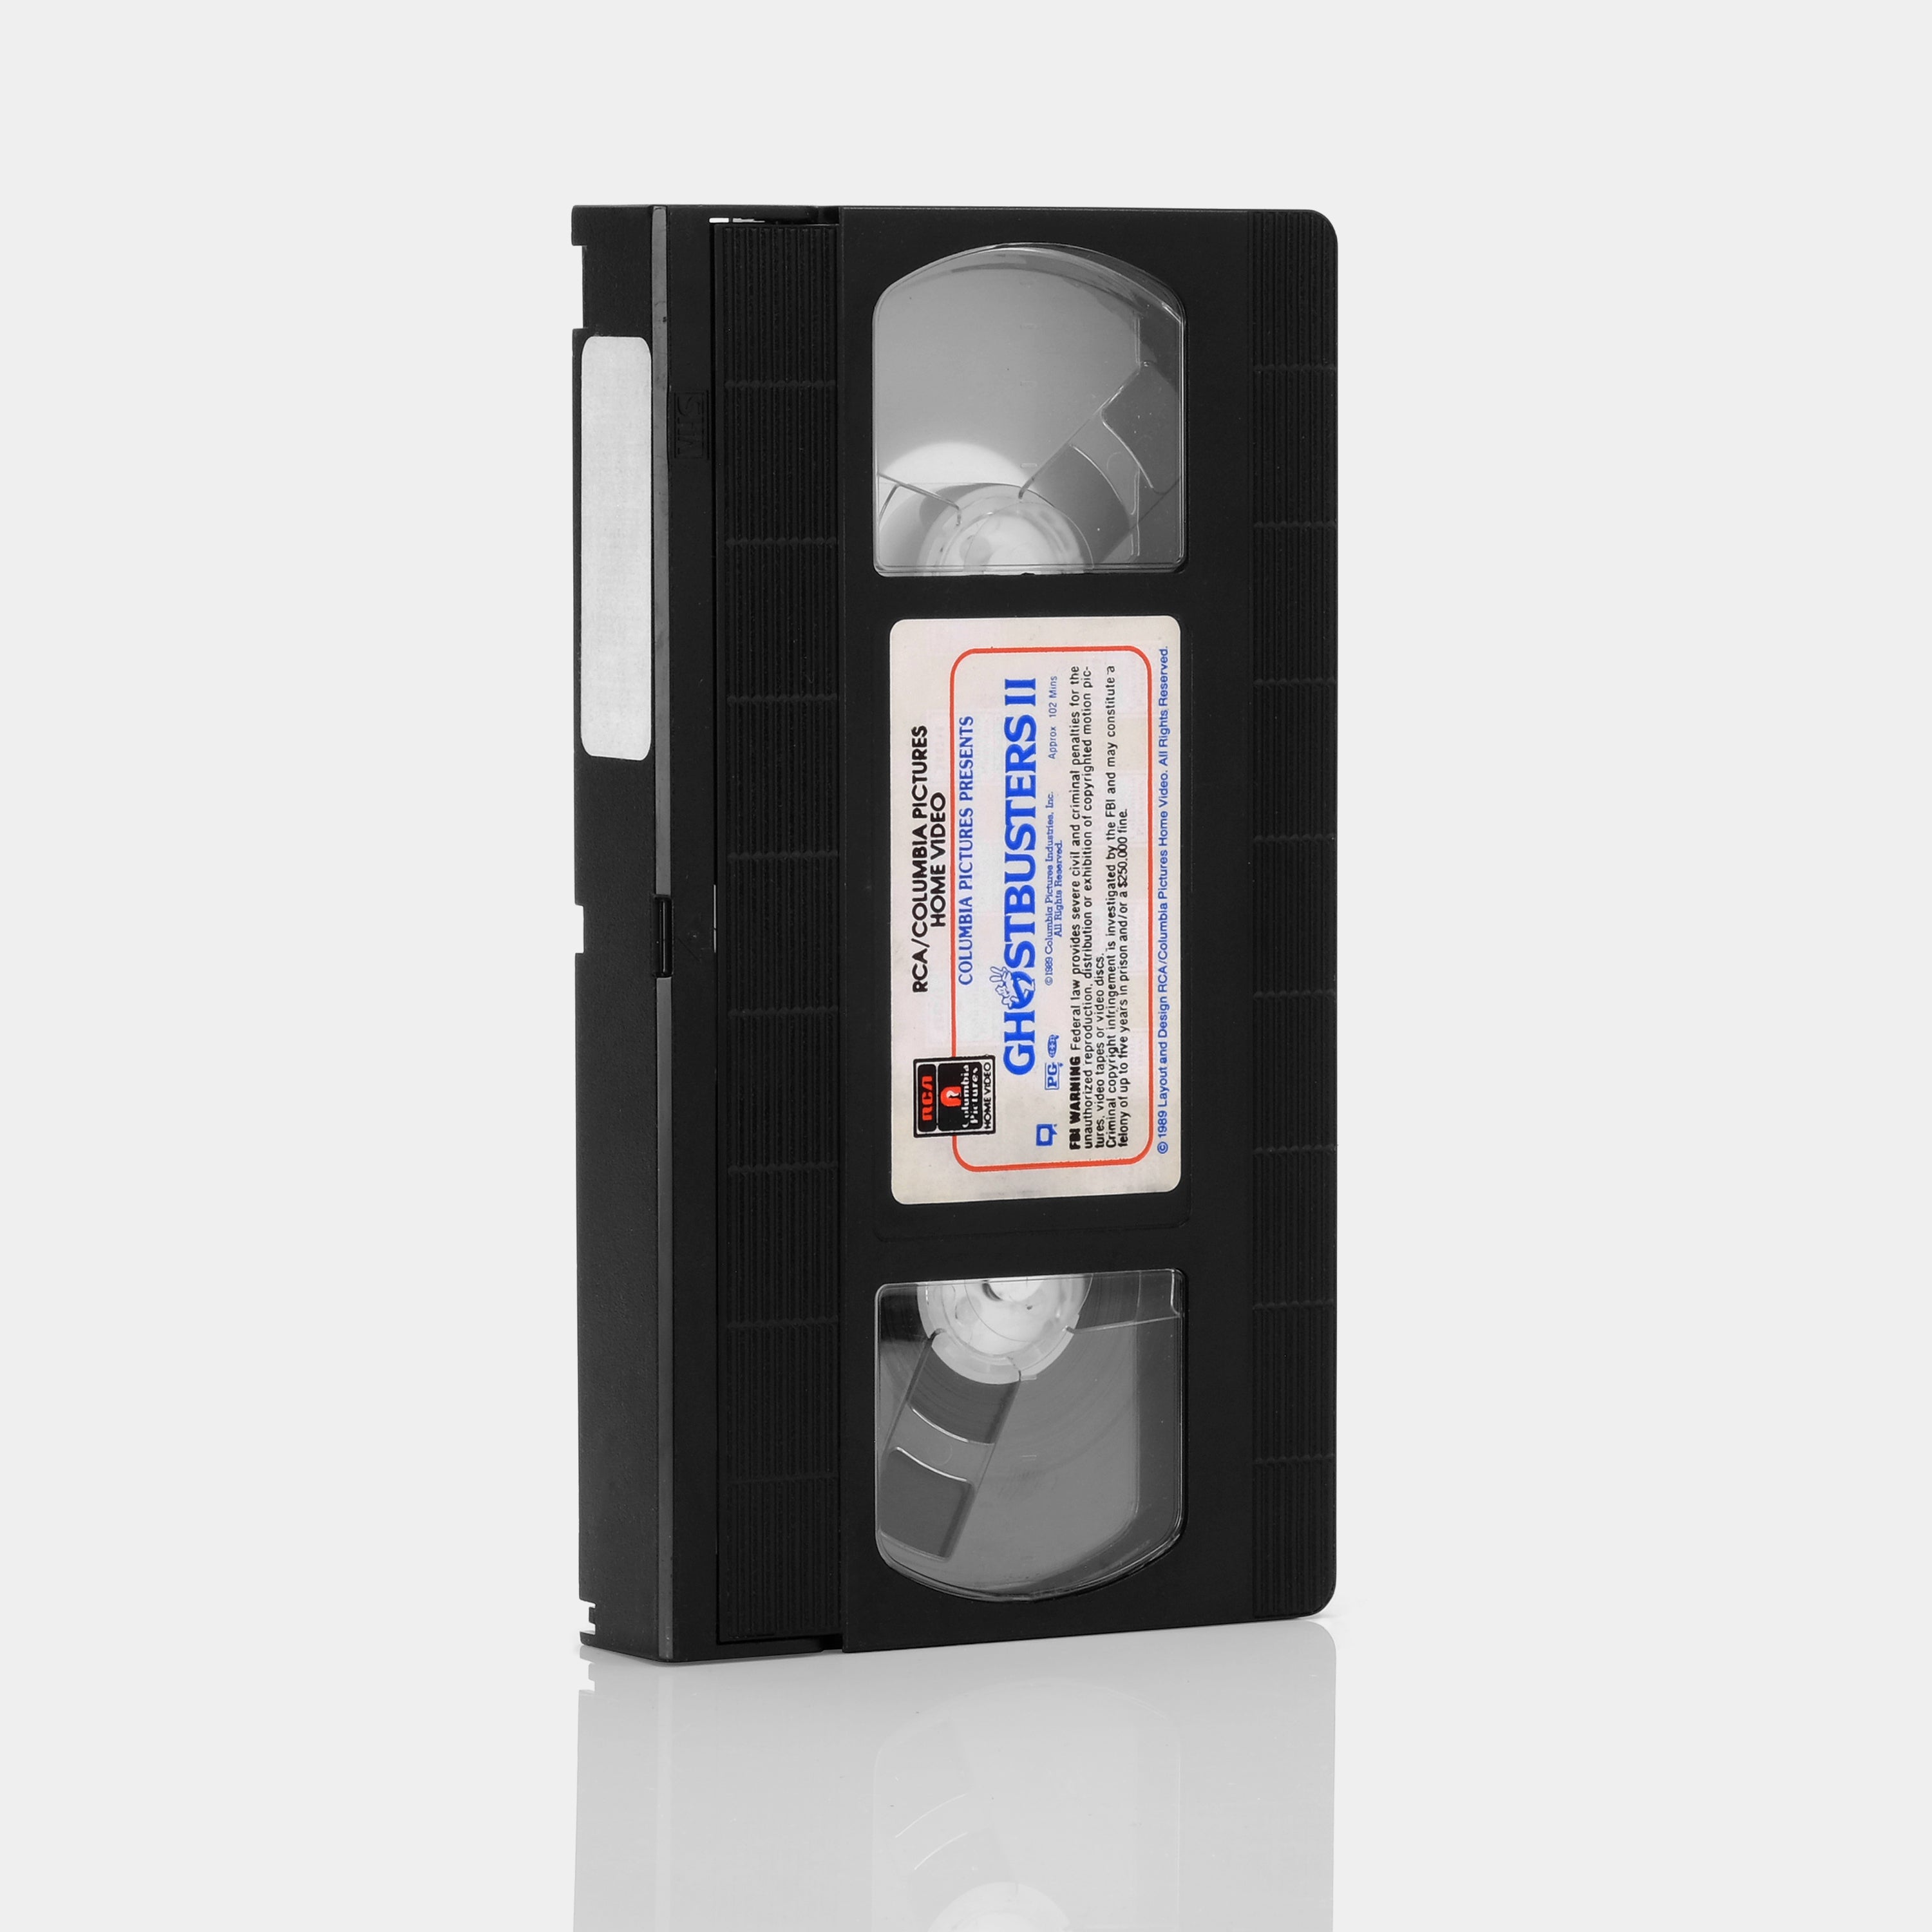 Ghostbusters II VHS Tape